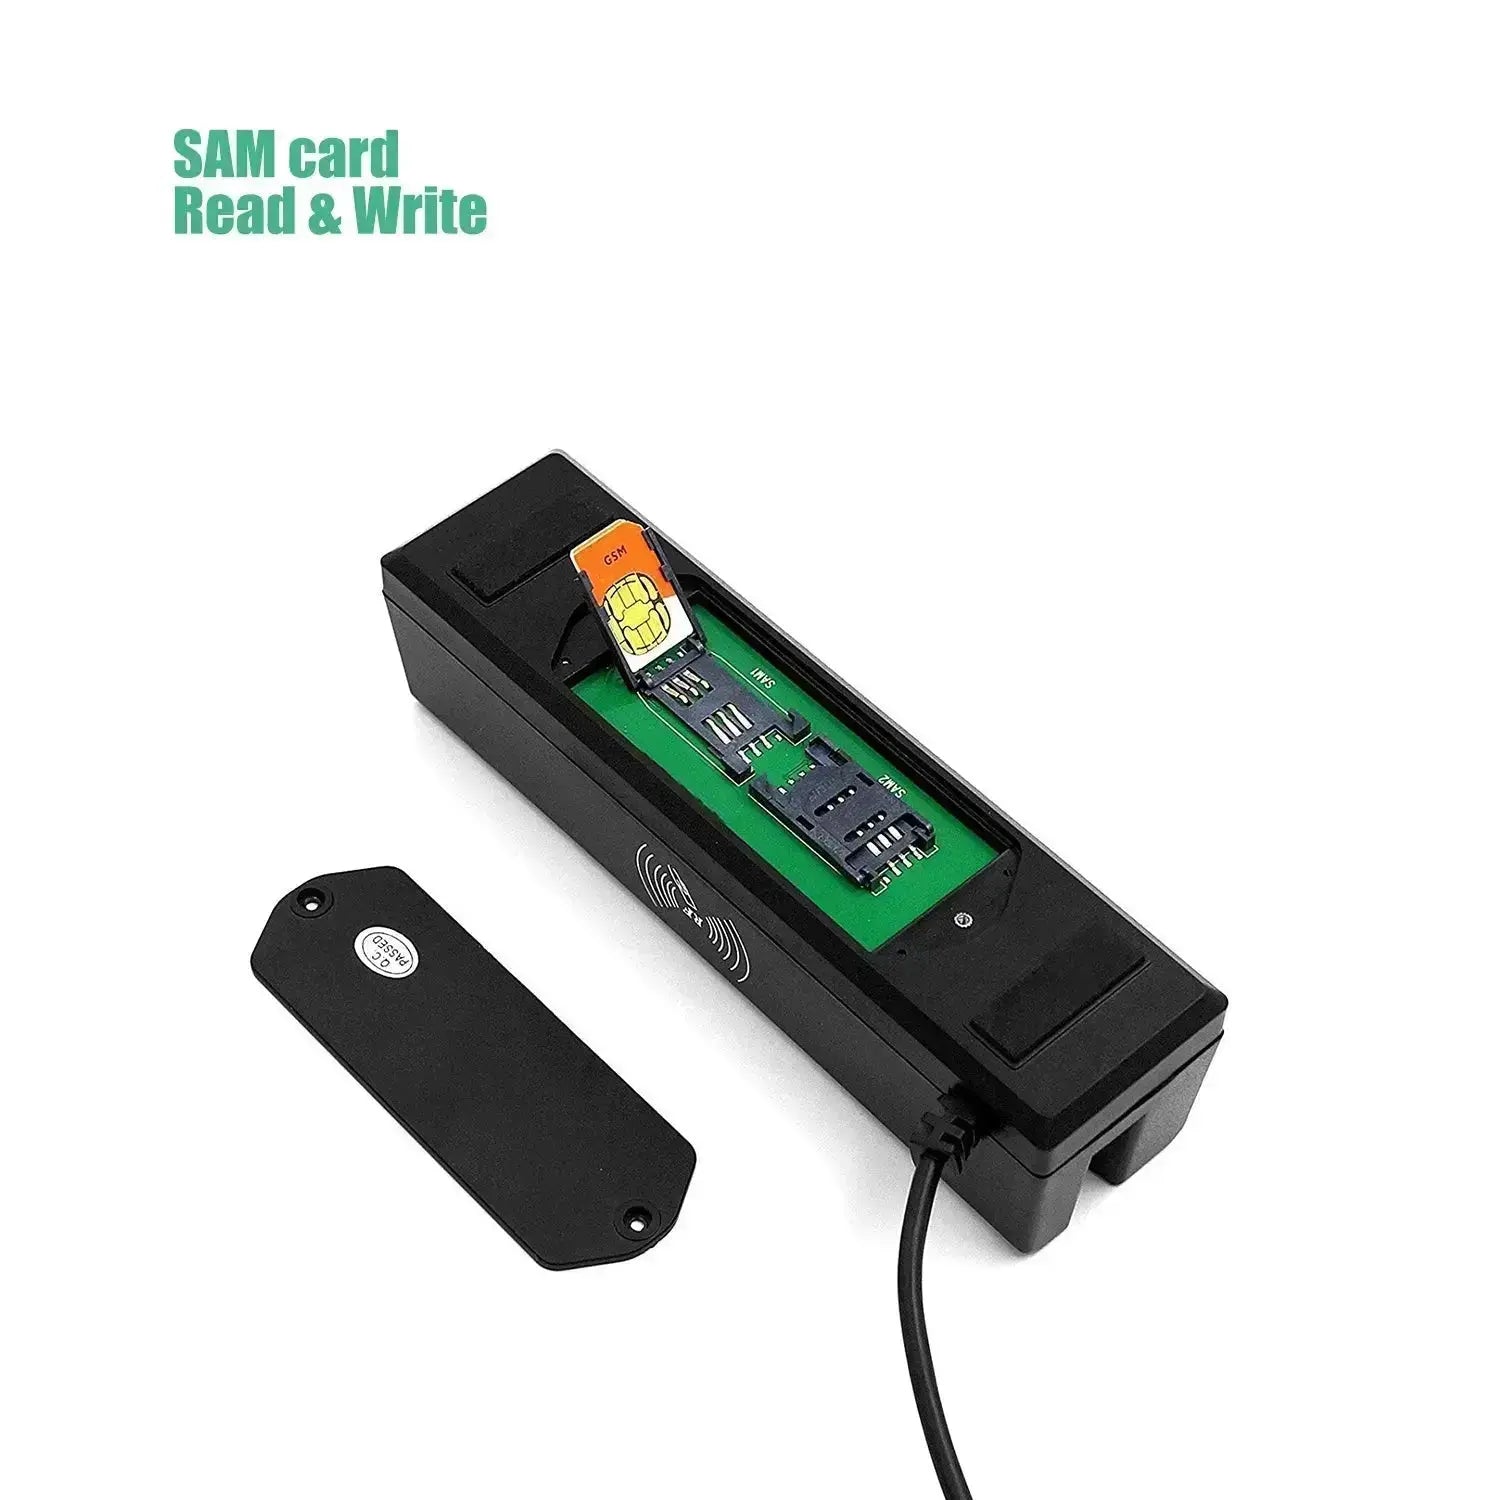 MSR160 4-in-1 RFID + Chip + Credit Card Reader Writer Tagtix RFID